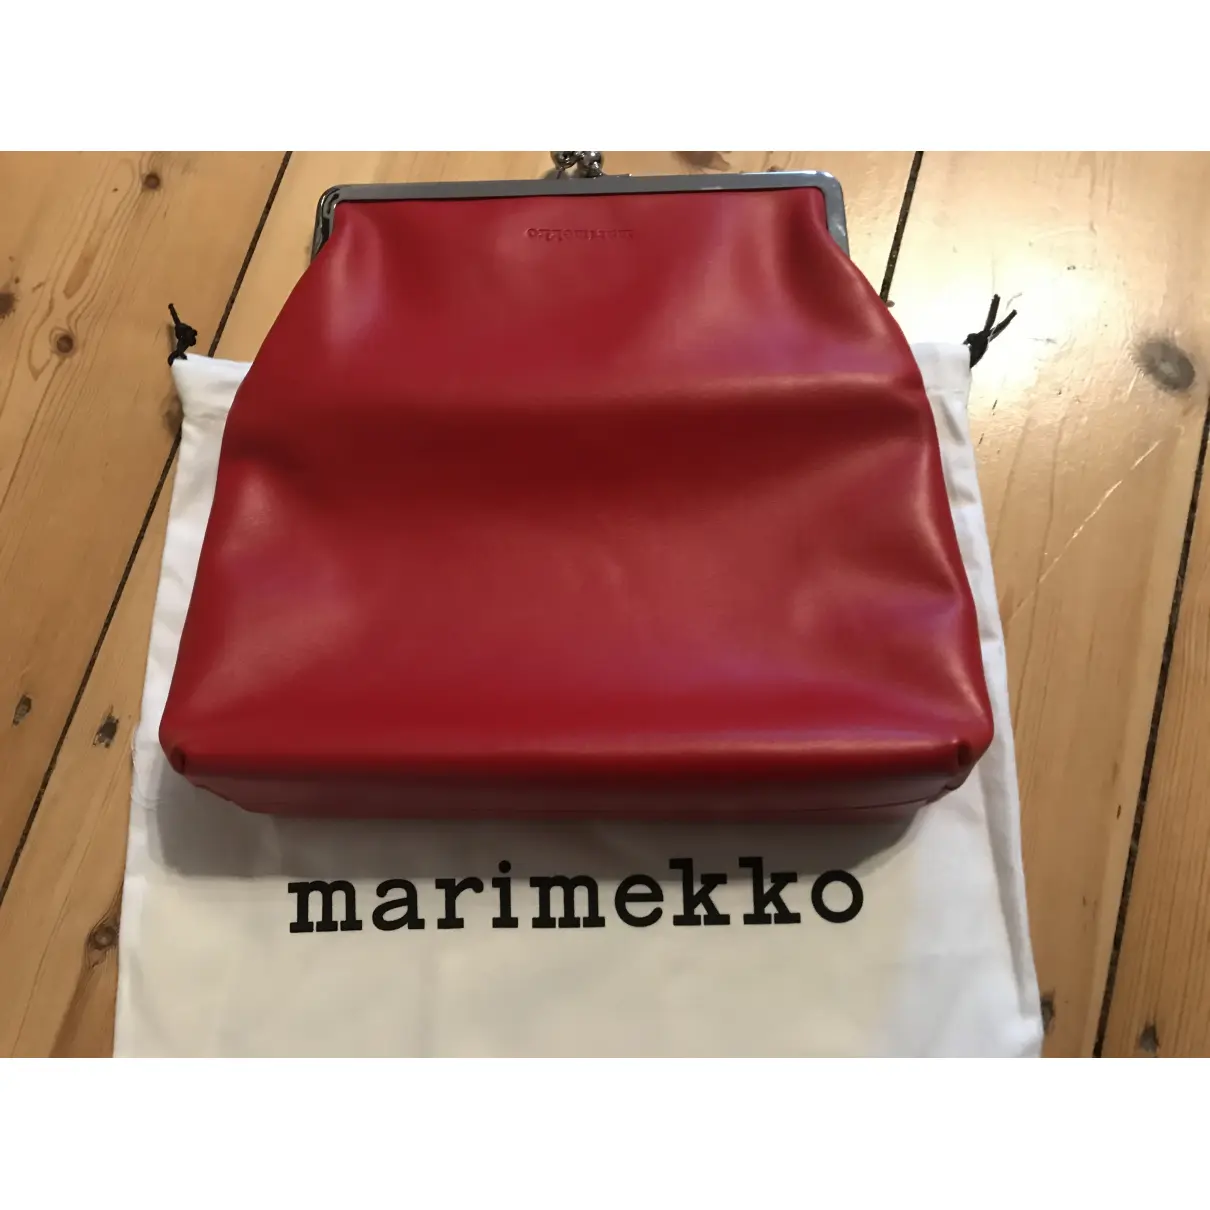 Buy Marimekko Leather clutch bag online